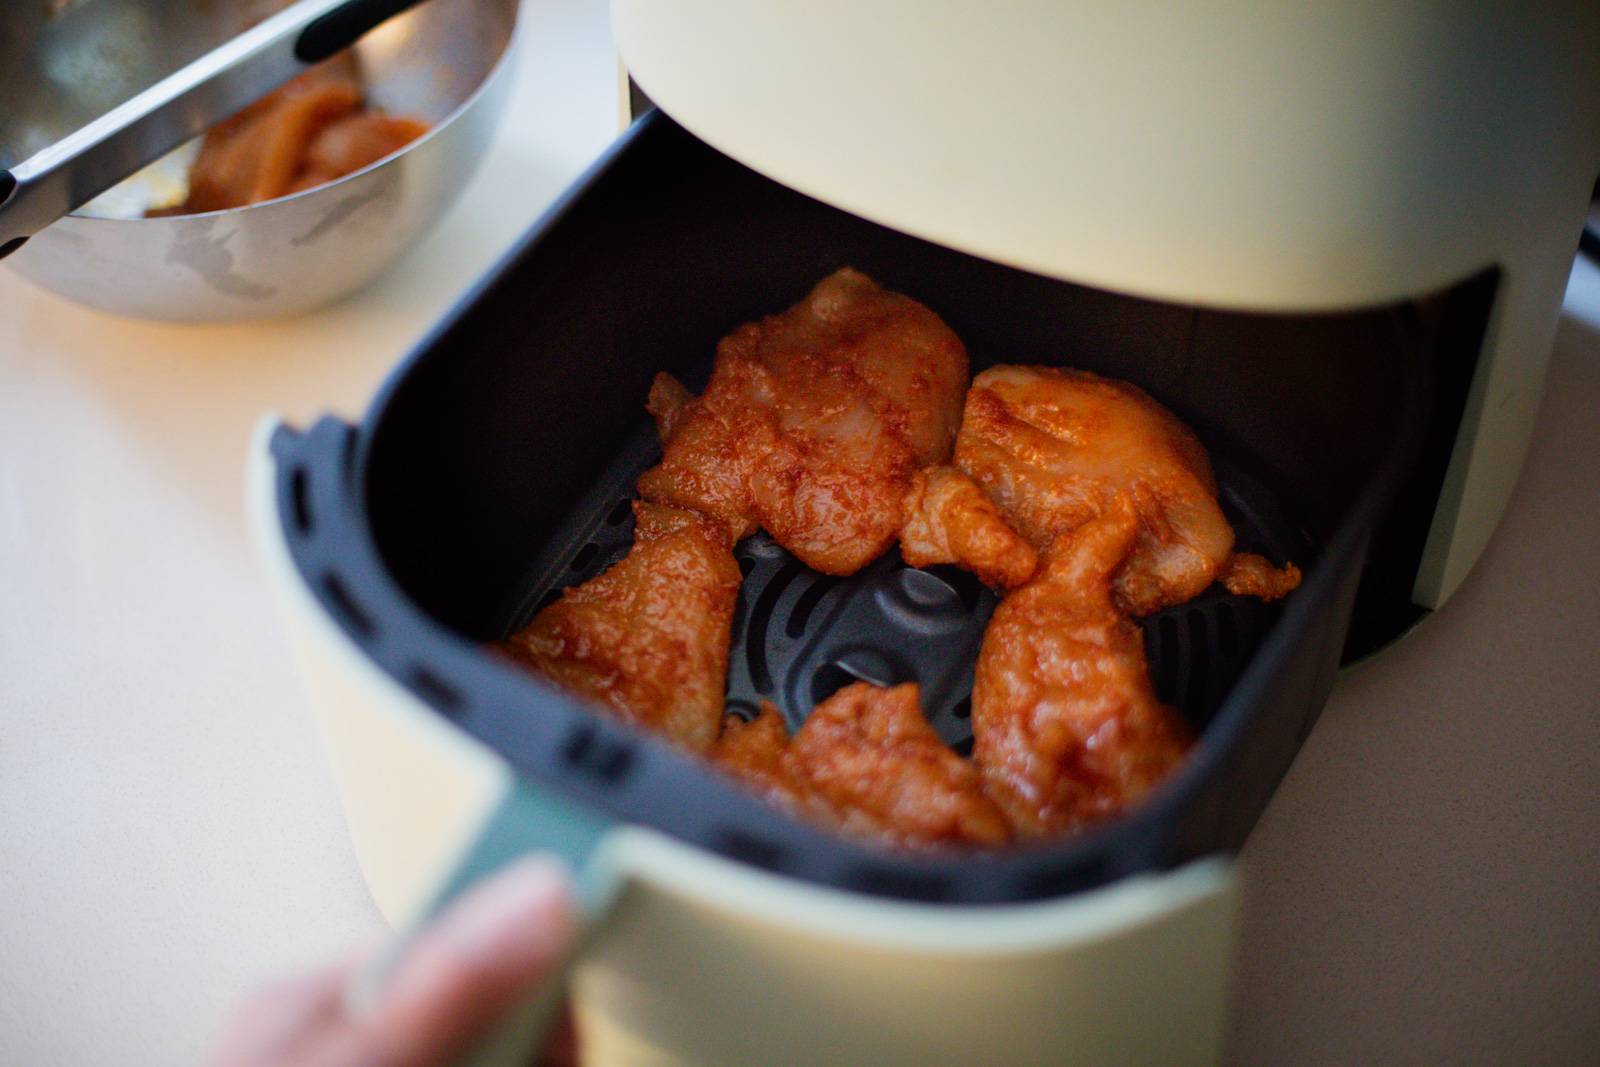 Chicken in air fryer basket before cooking.